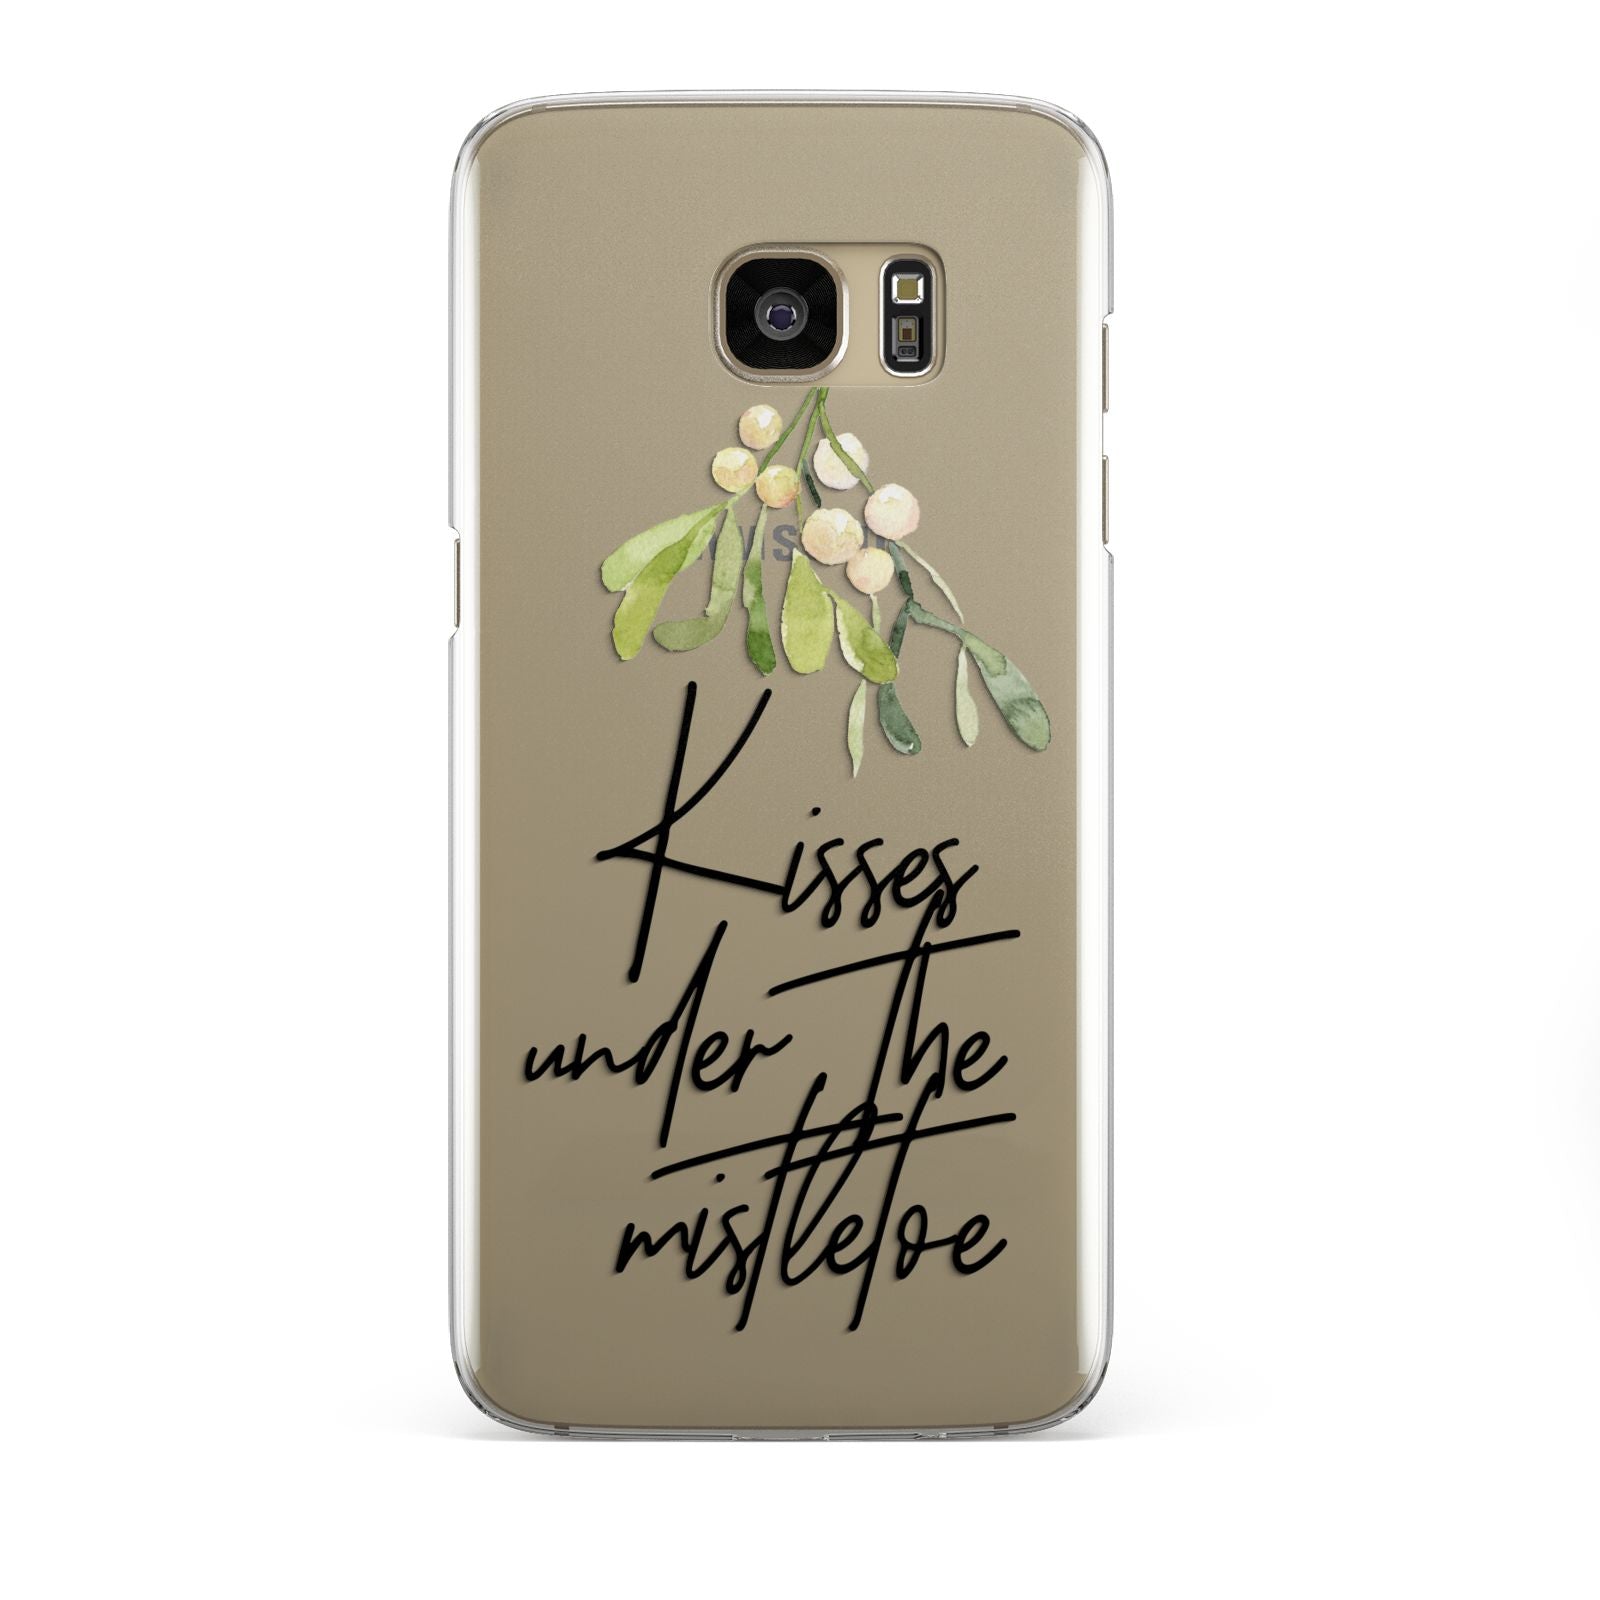 Kisses Under The Mistletoe Samsung Galaxy S7 Edge Case